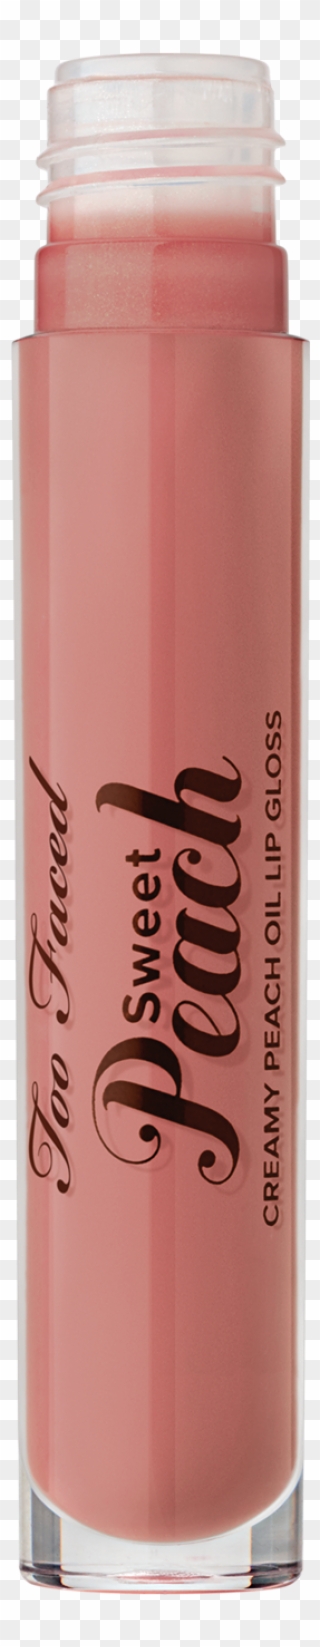 Sweet - Lip Gloss Clipart